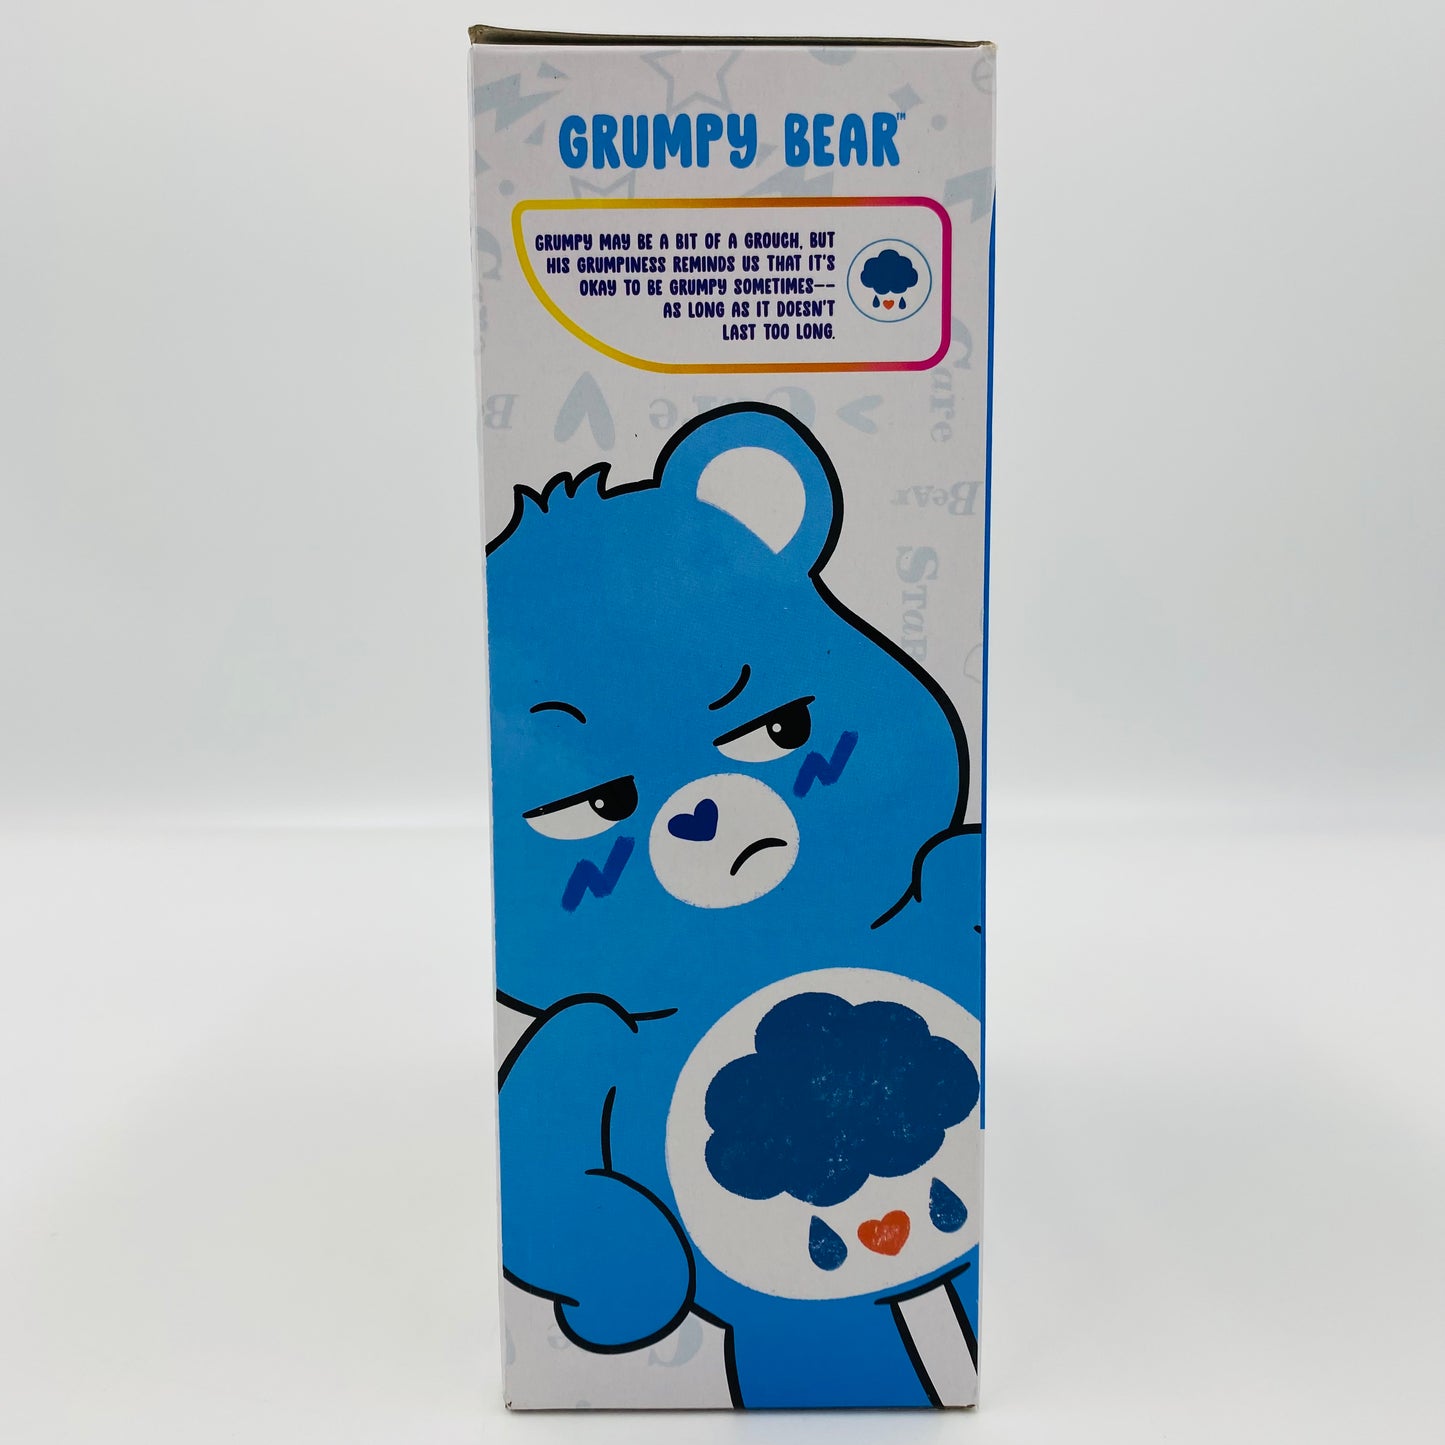 Care Bears Unlock the Magic Grumpy Bear Interactive Figure (2020) Basic Fun!